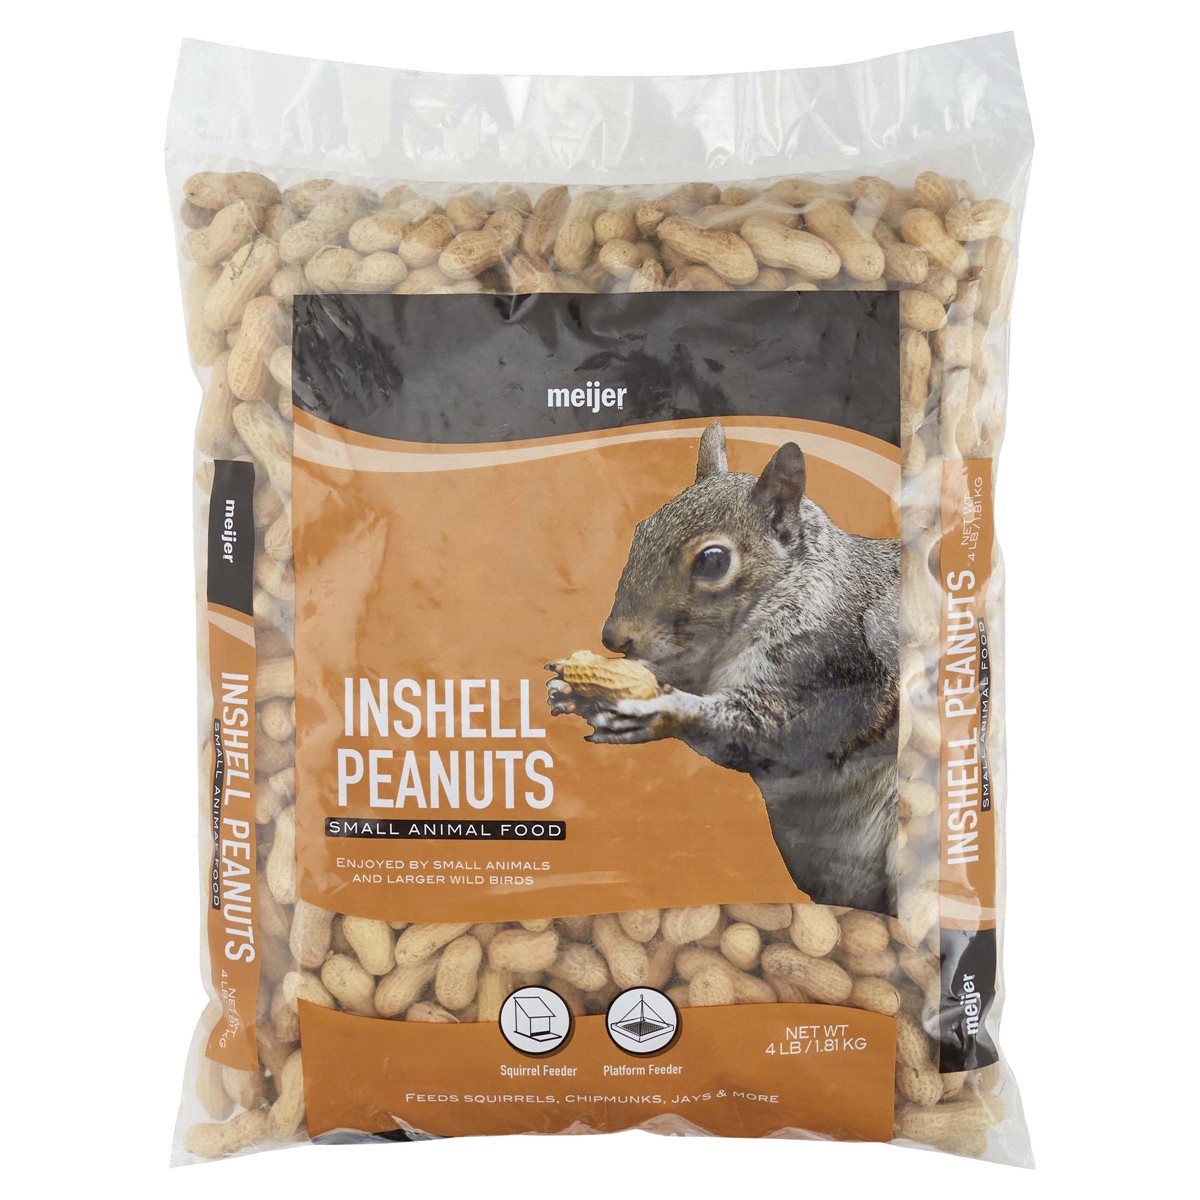 slide 1 of 29, Meijer Squirrel In Shell Peanuts, 4 lb